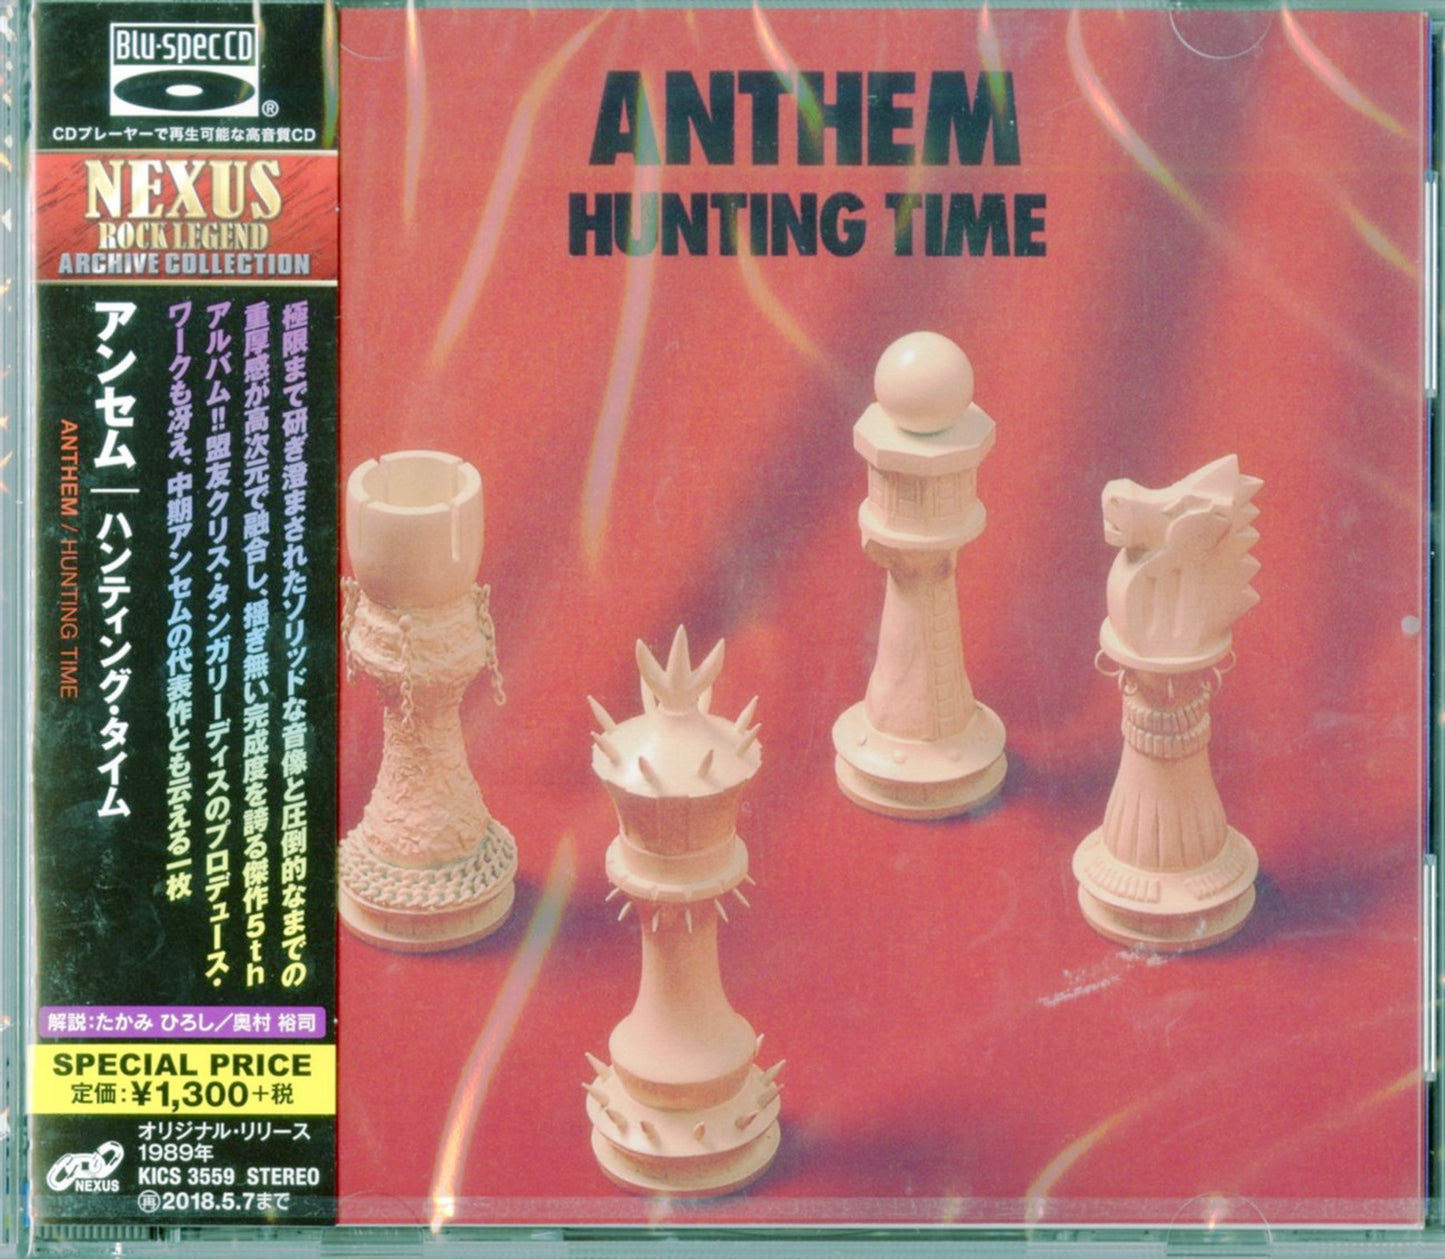 Anthem - Hunting Time - Japan  Blu-spec CD